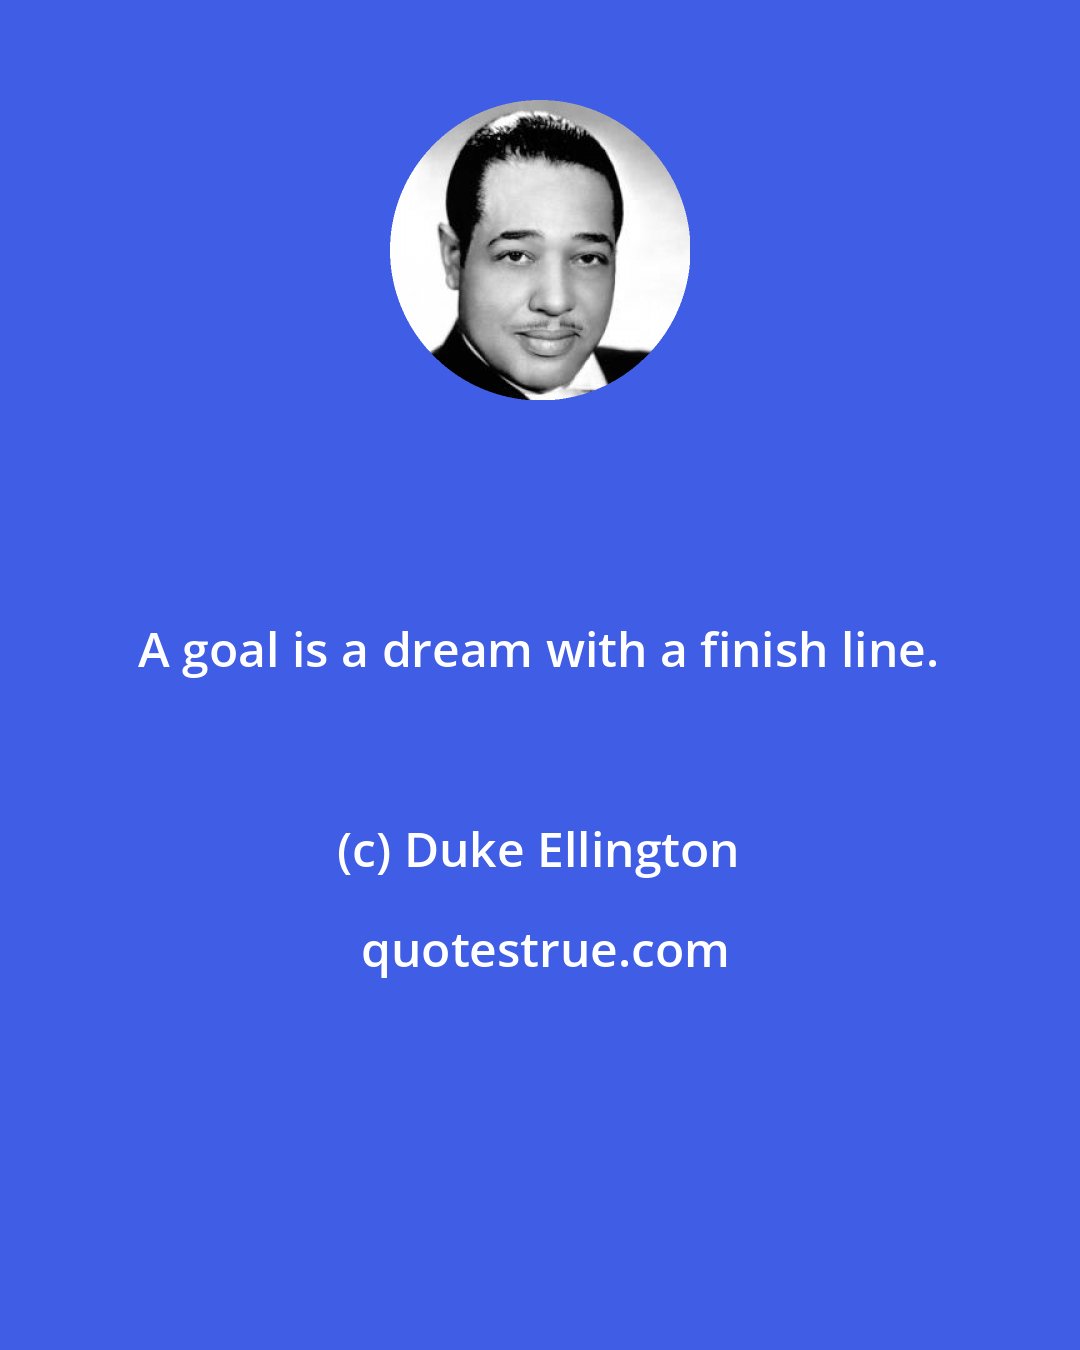 Duke Ellington: A goal is a dream with a finish line.